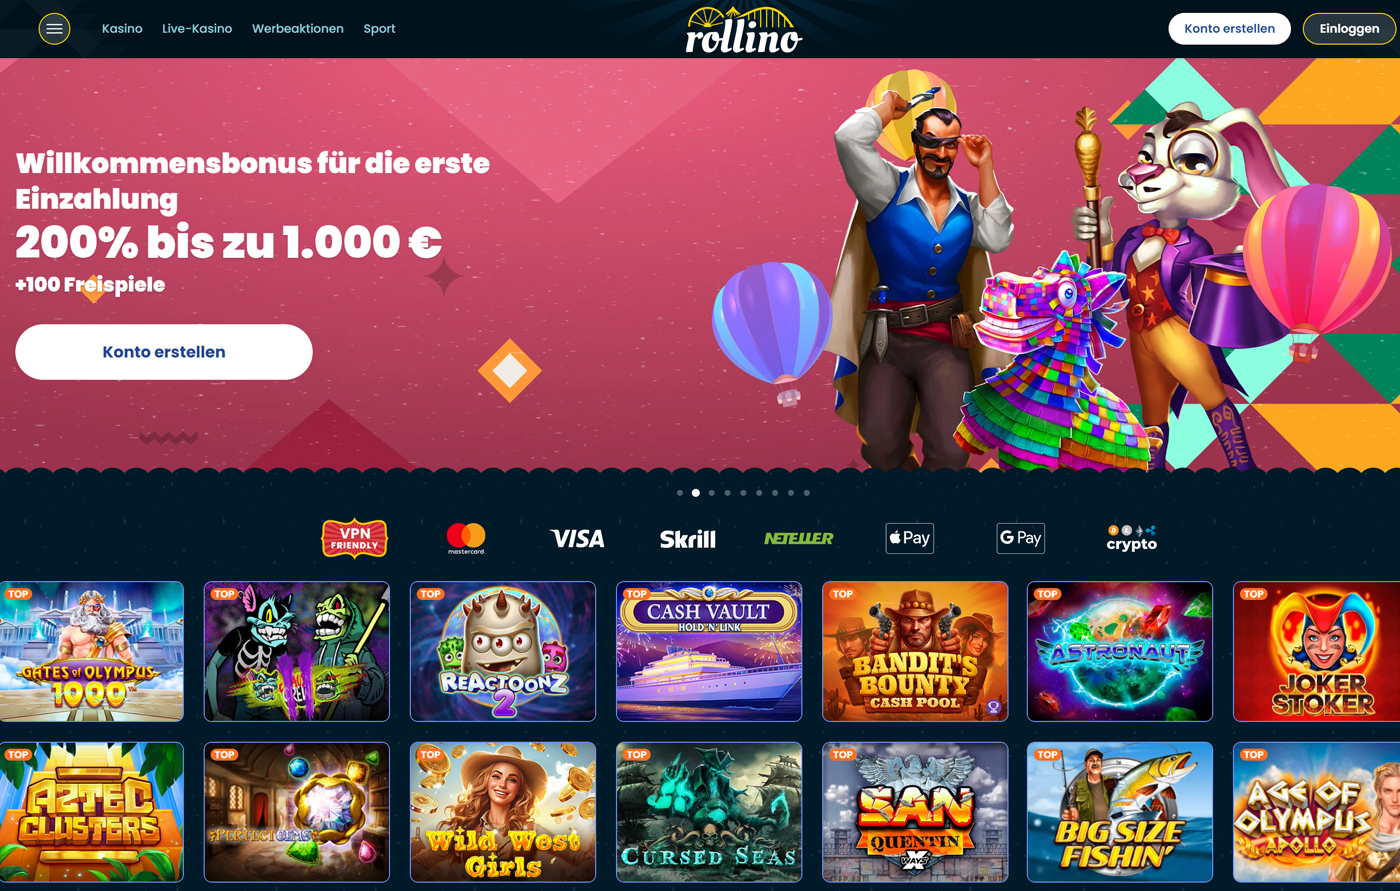 Rollino – Hol dir 200% Bonus bis 1000 Euro